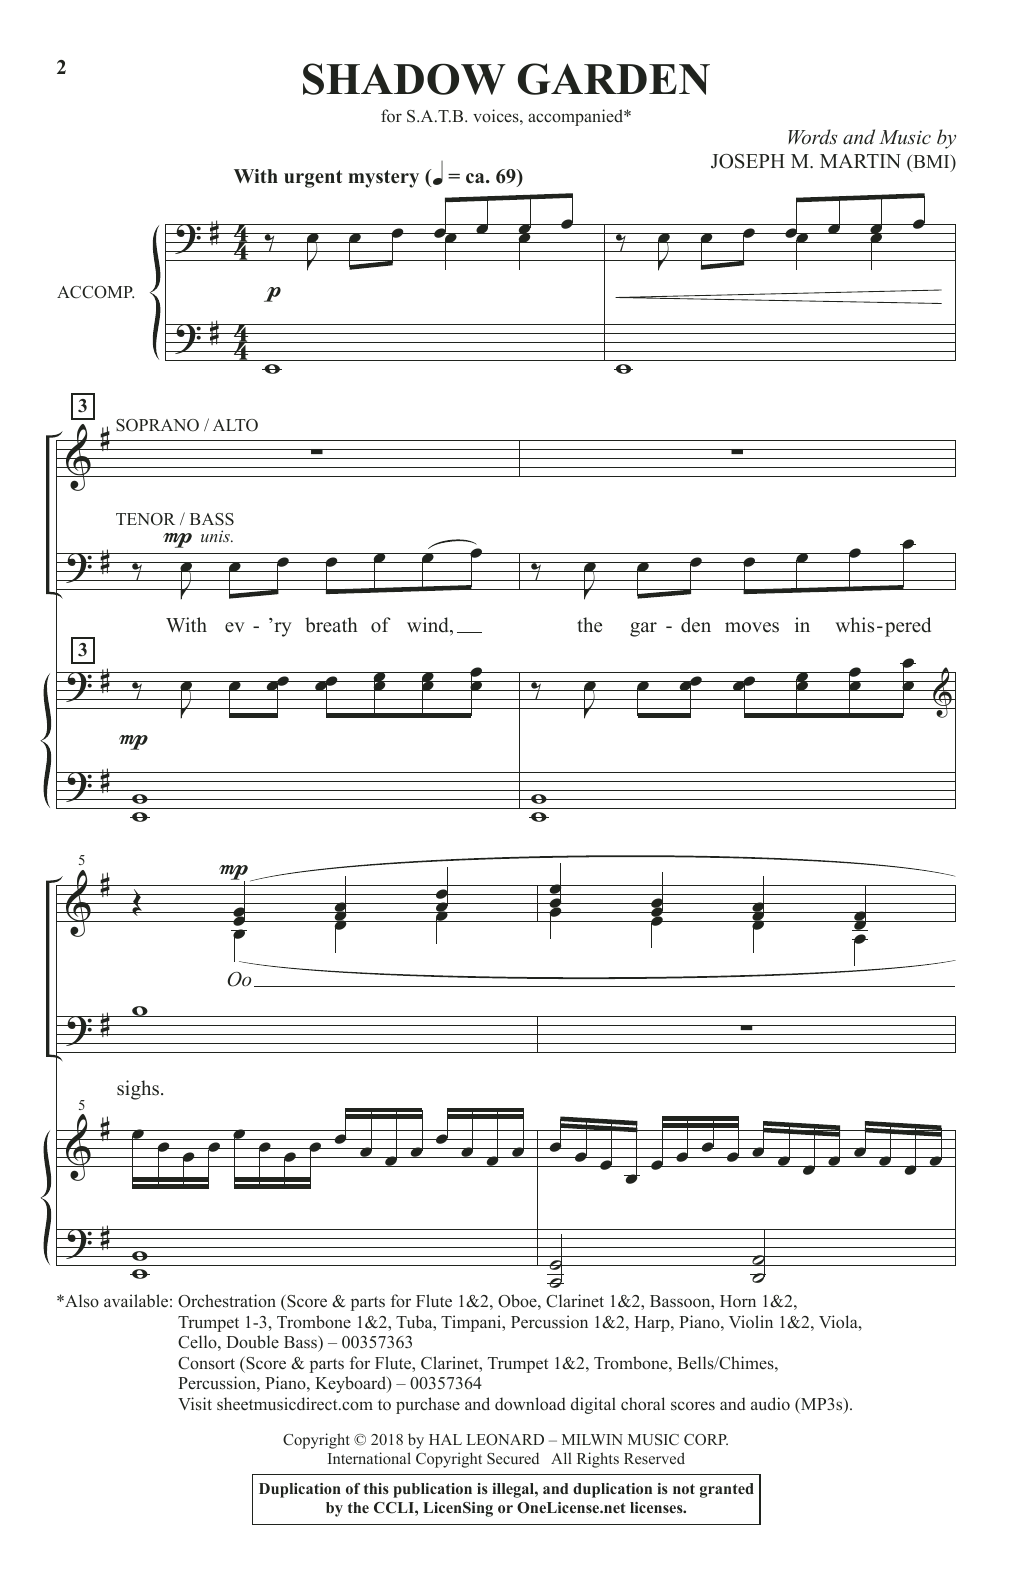 Joseph M. Martin Shadow Garden Sheet Music Notes & Chords for SATB Choir - Download or Print PDF